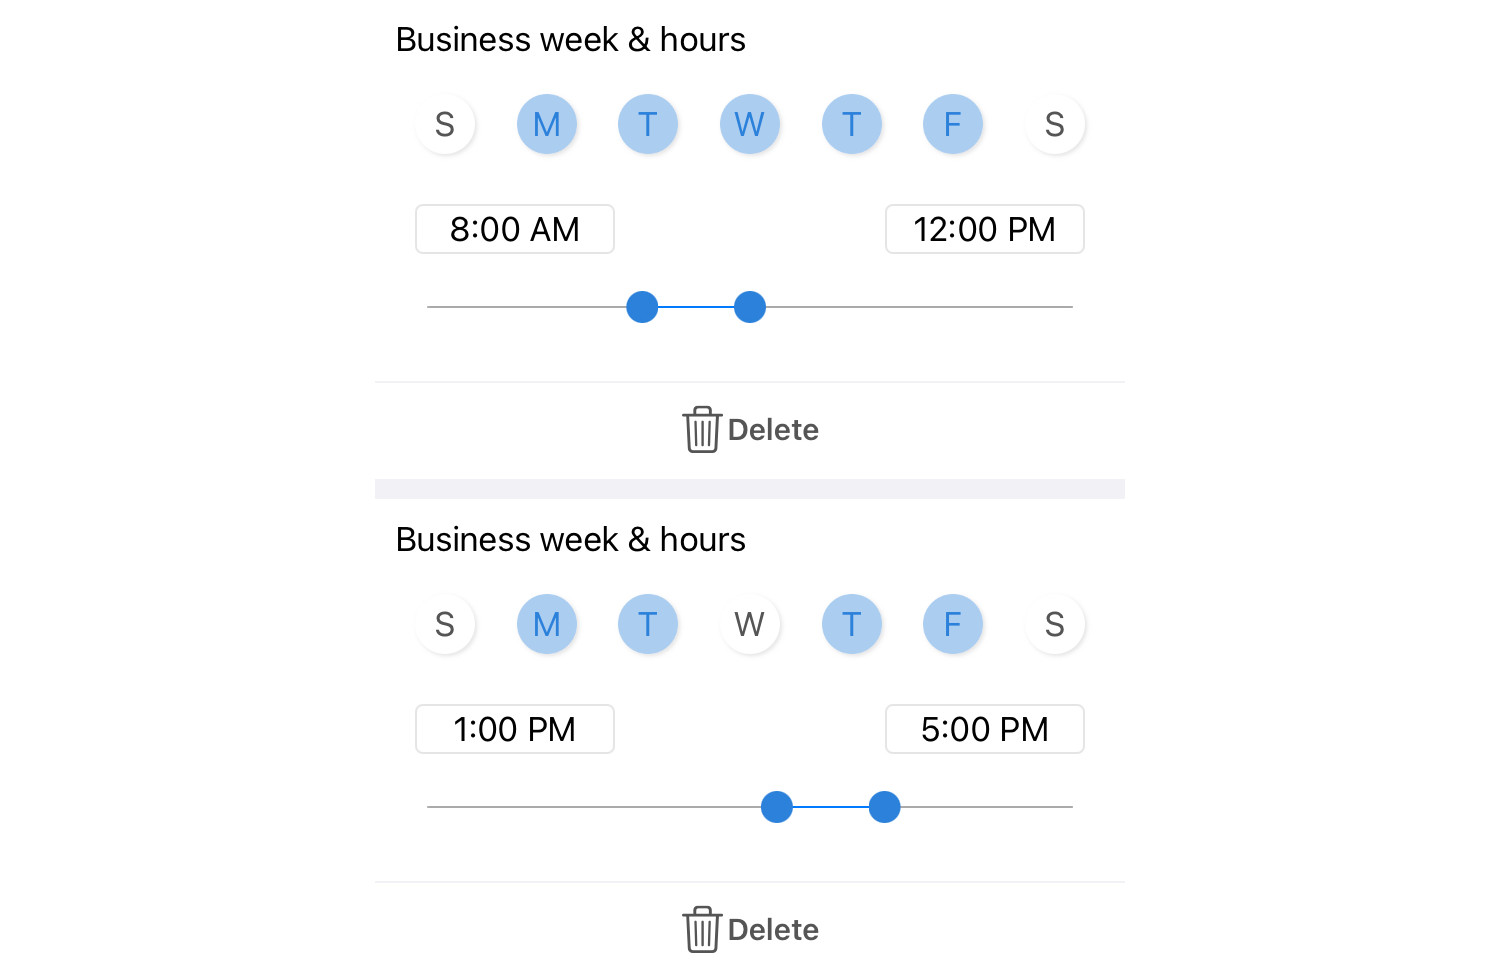 Schedule business week & hours in multiple time slots